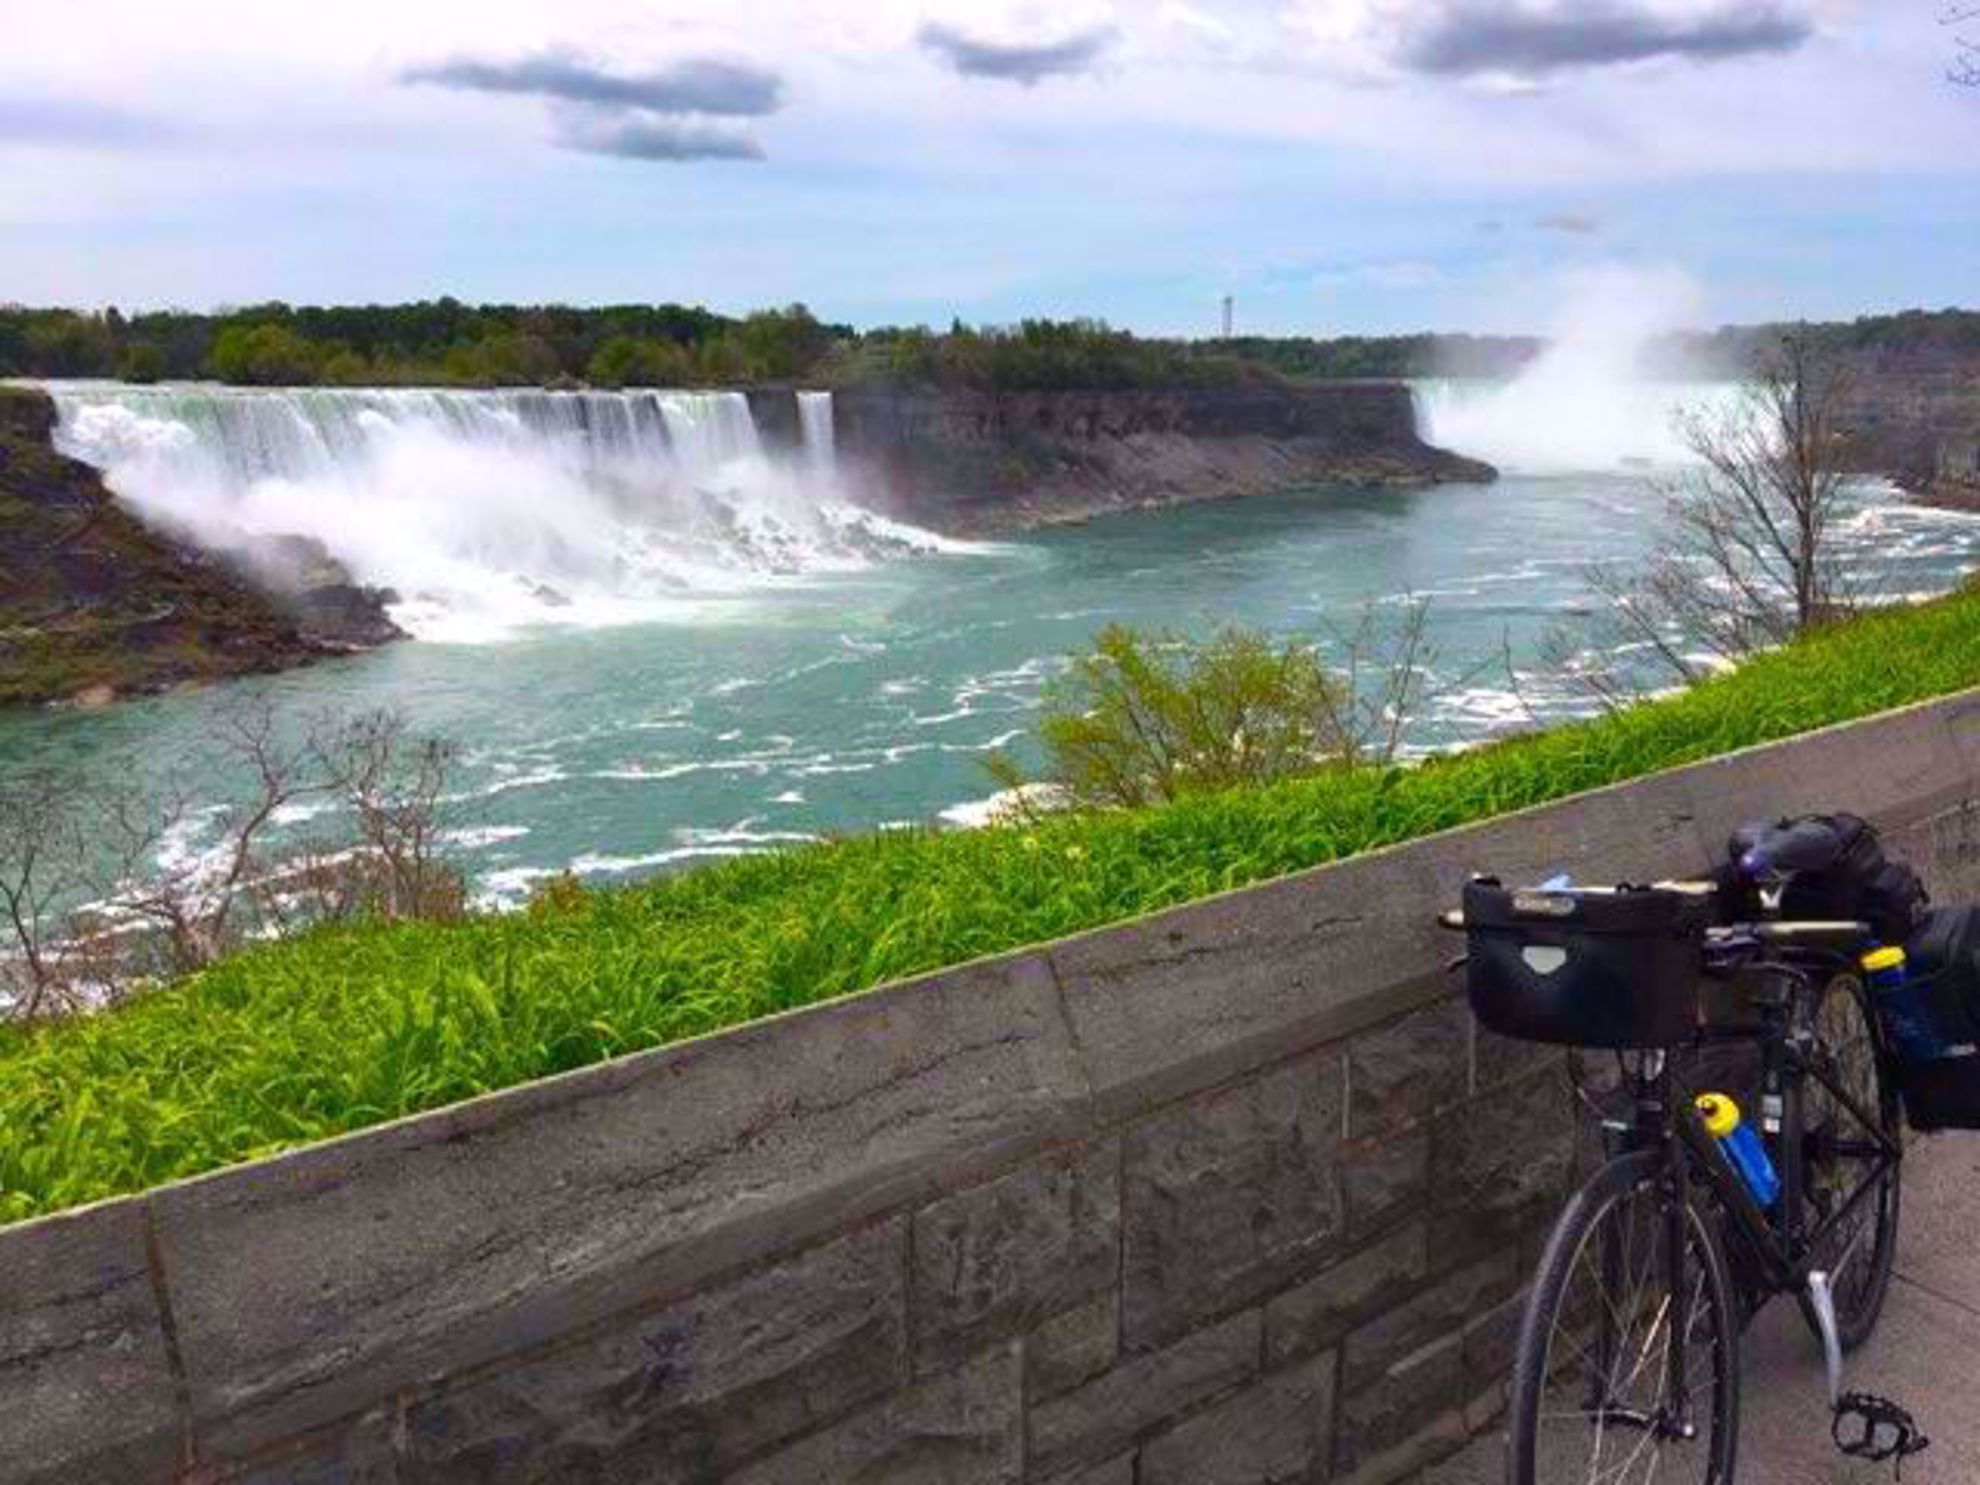 Biking by the falls